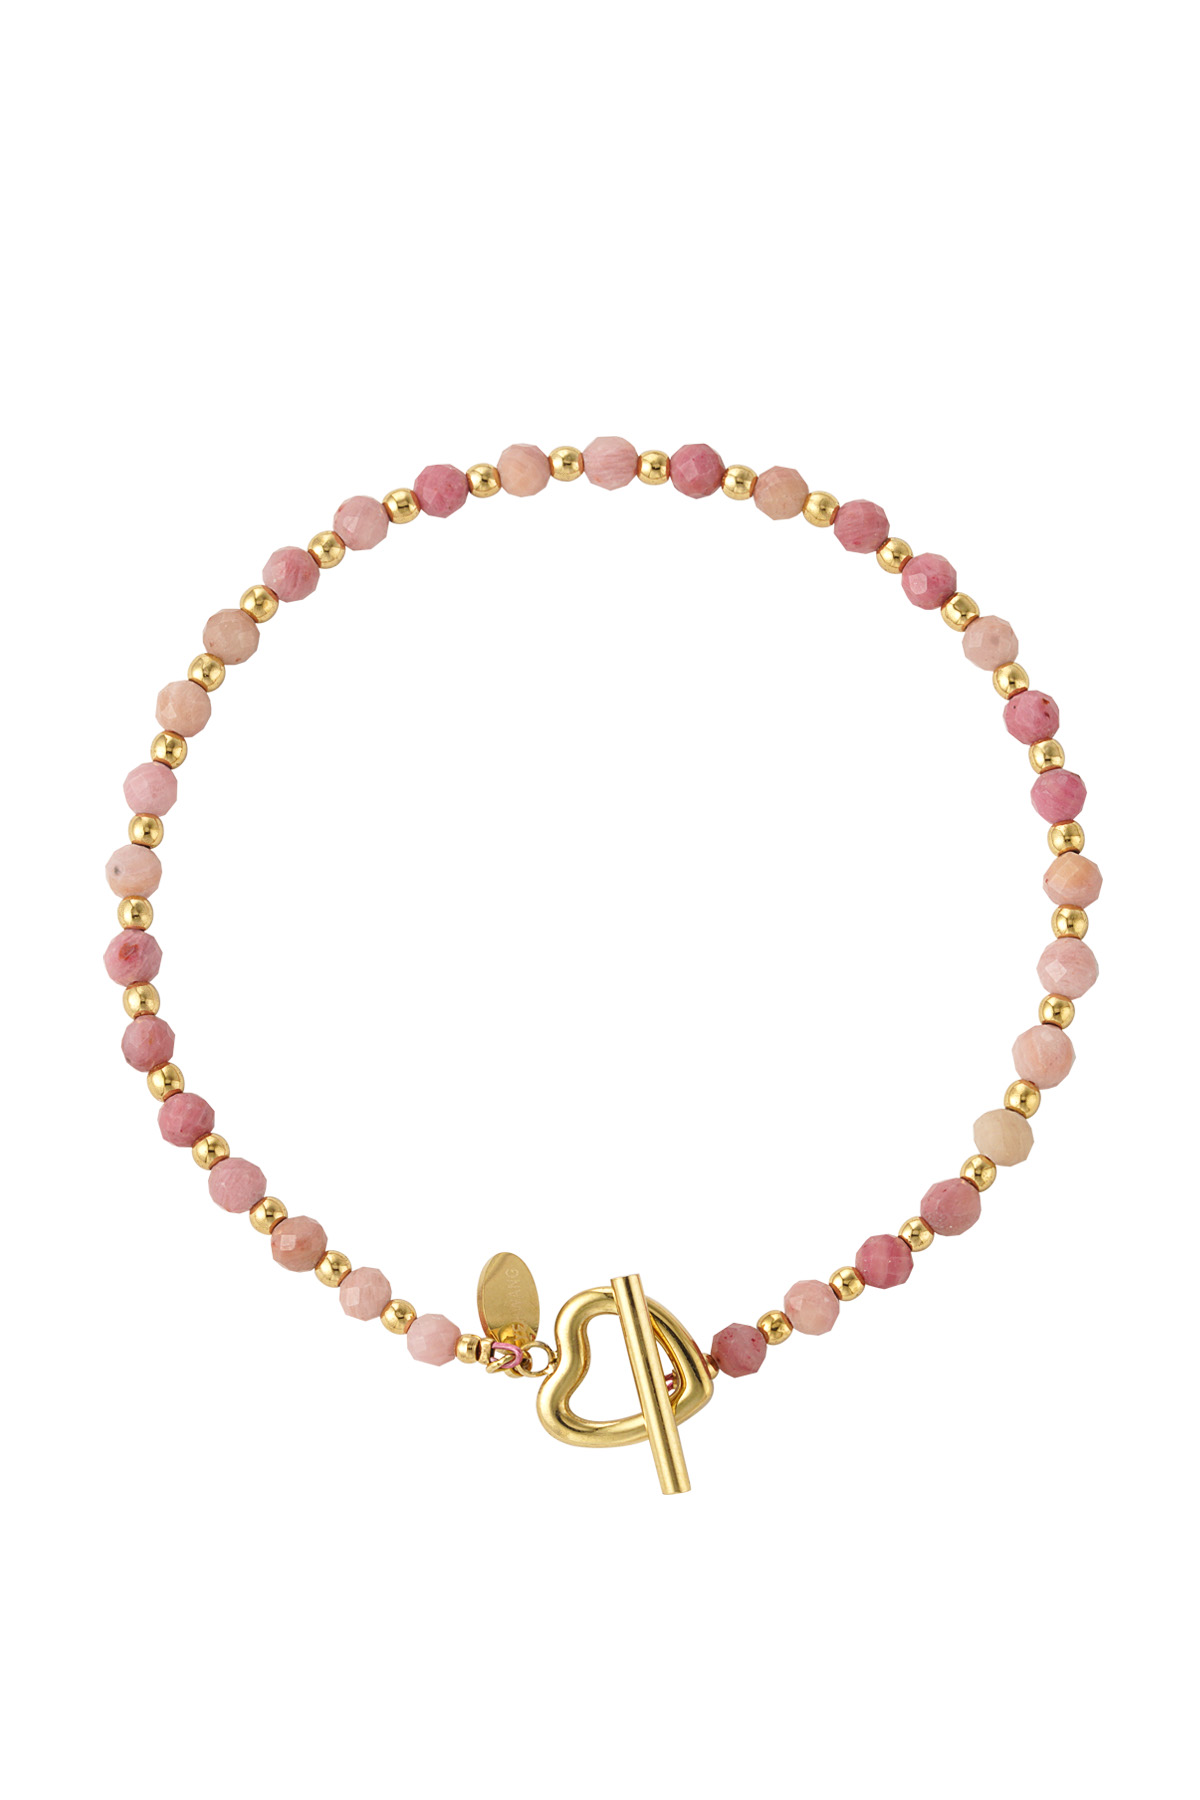 Bracelet perlé cadenas coeur - acier inoxydable rose/doré h5 